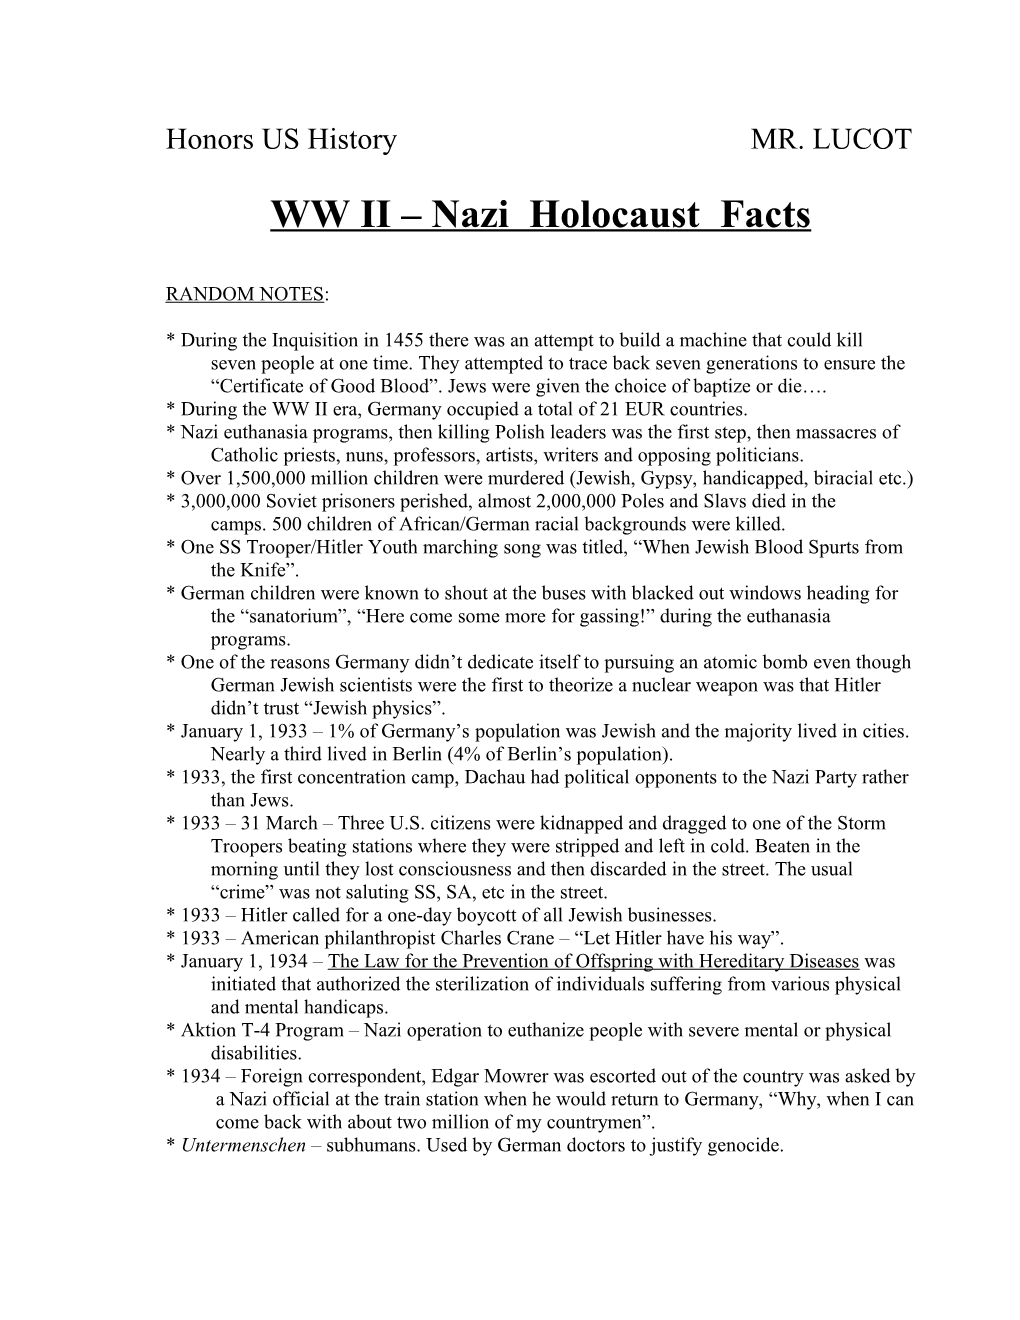 WW II Nazi Holocaust Facts